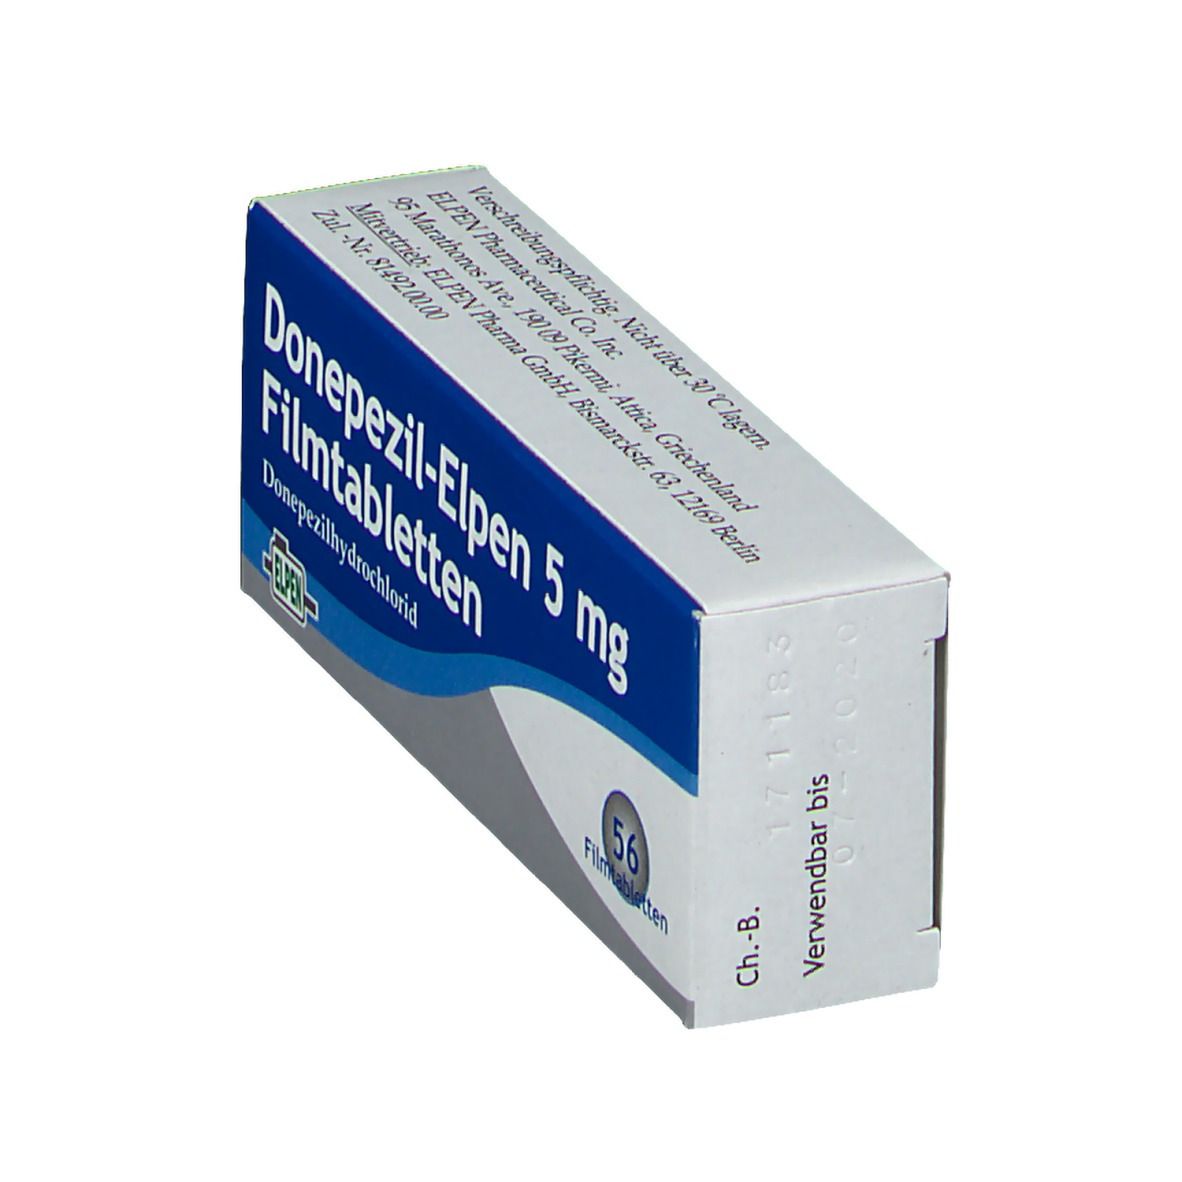 Donepezil-Elpen 5 mg